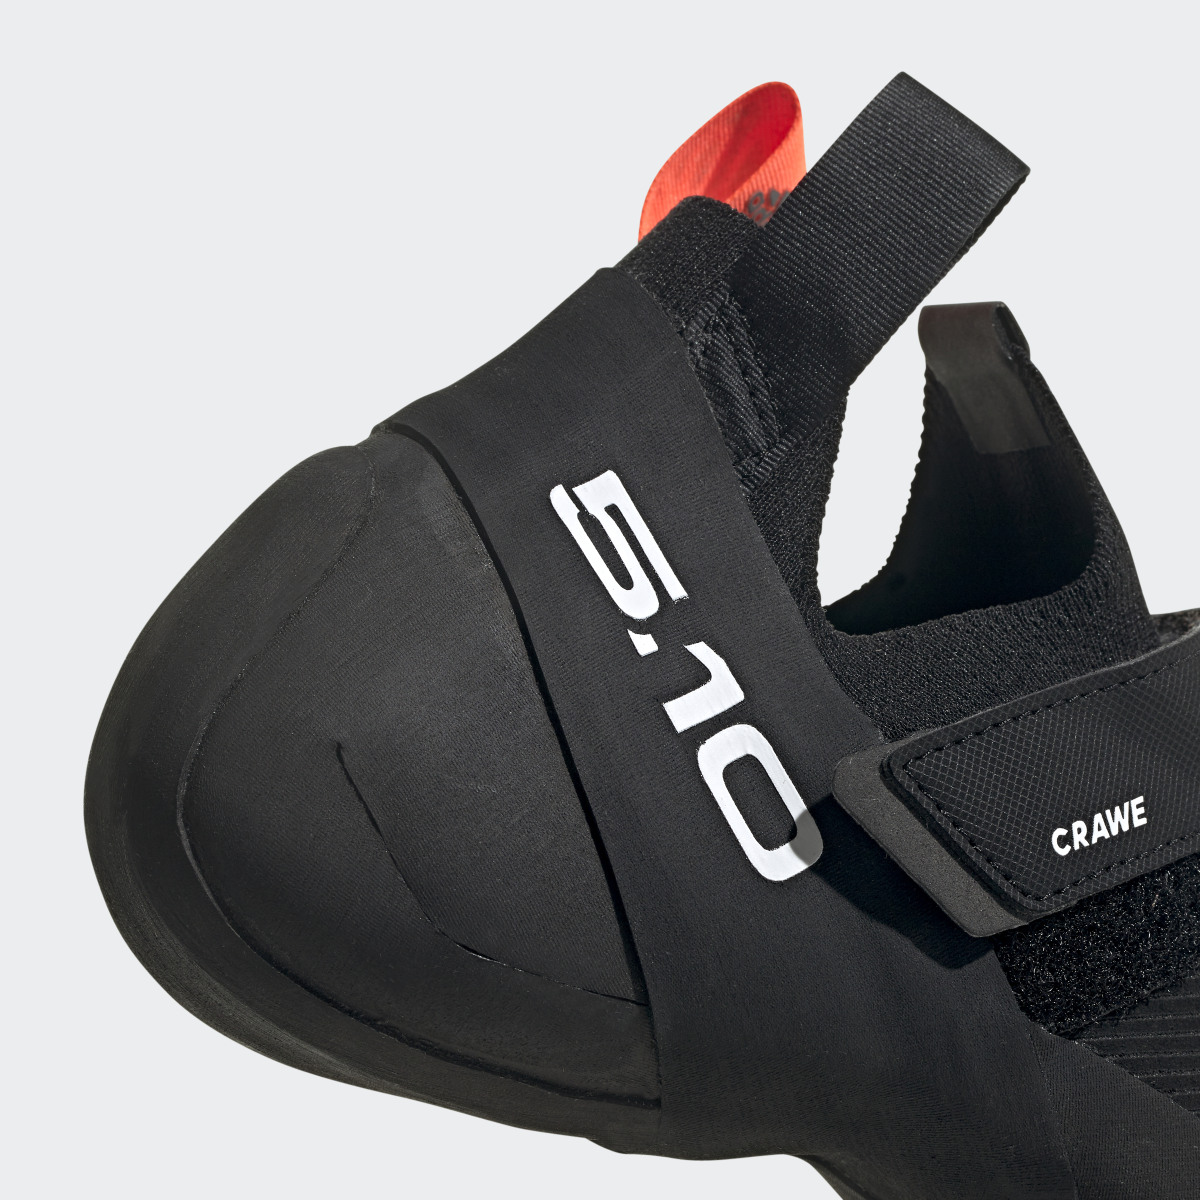 Adidas Scarpe da climbing Five Ten Crawe. 10